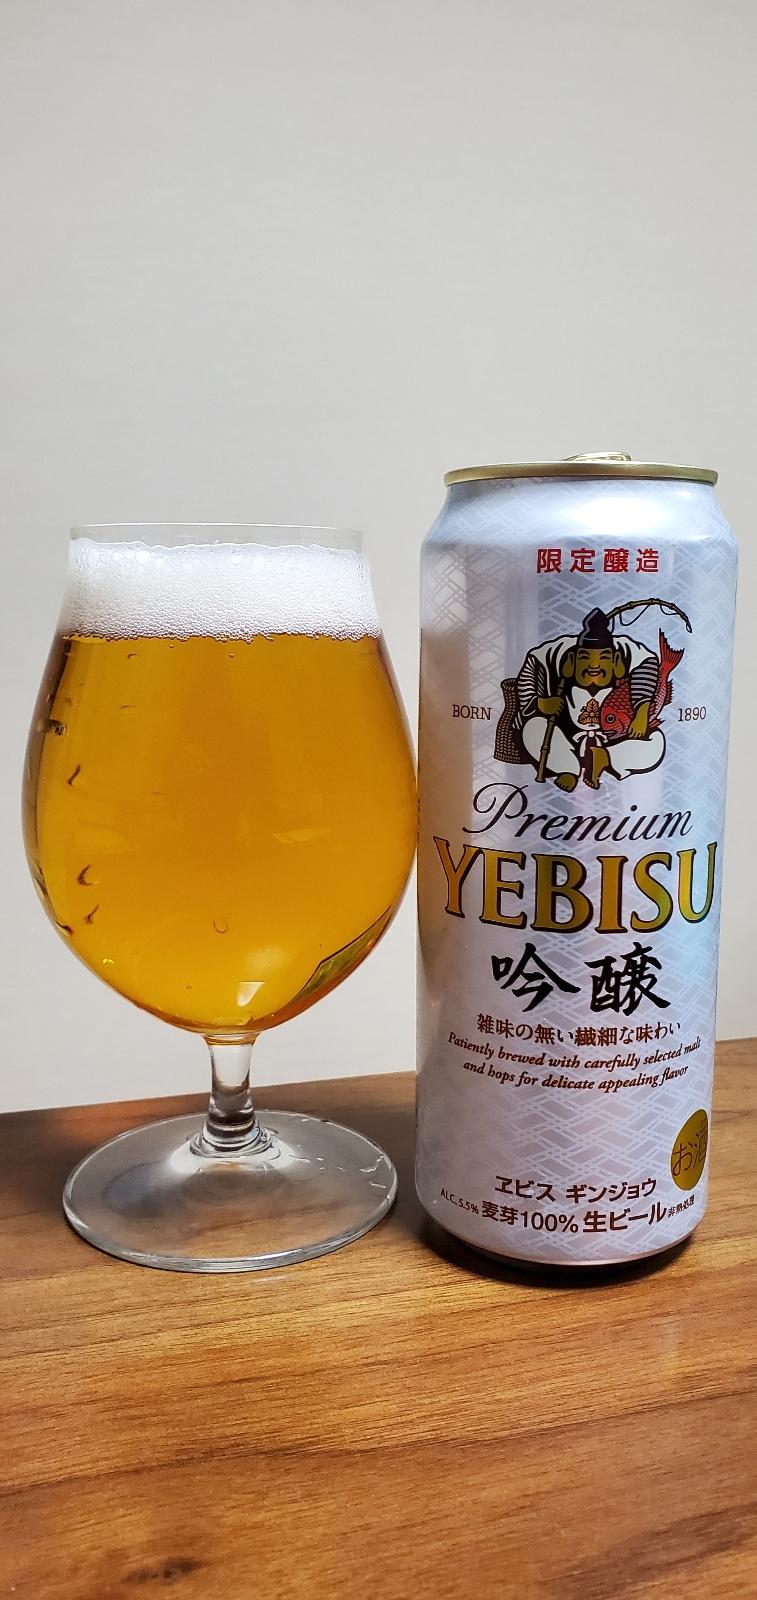 Yebisu Premium Ginjyou